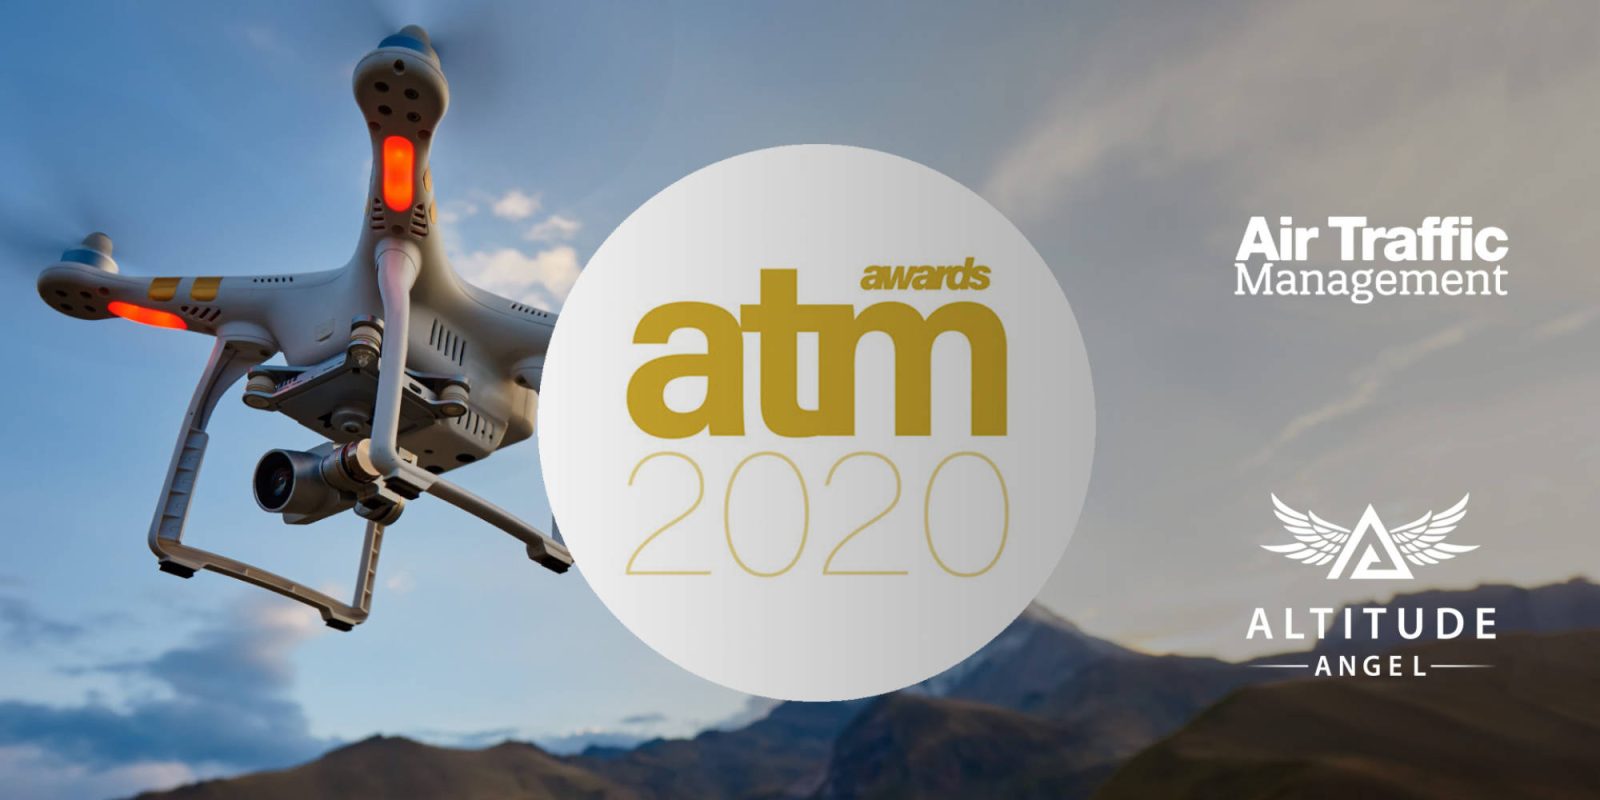 Altitude Angel ATM Magazine awards